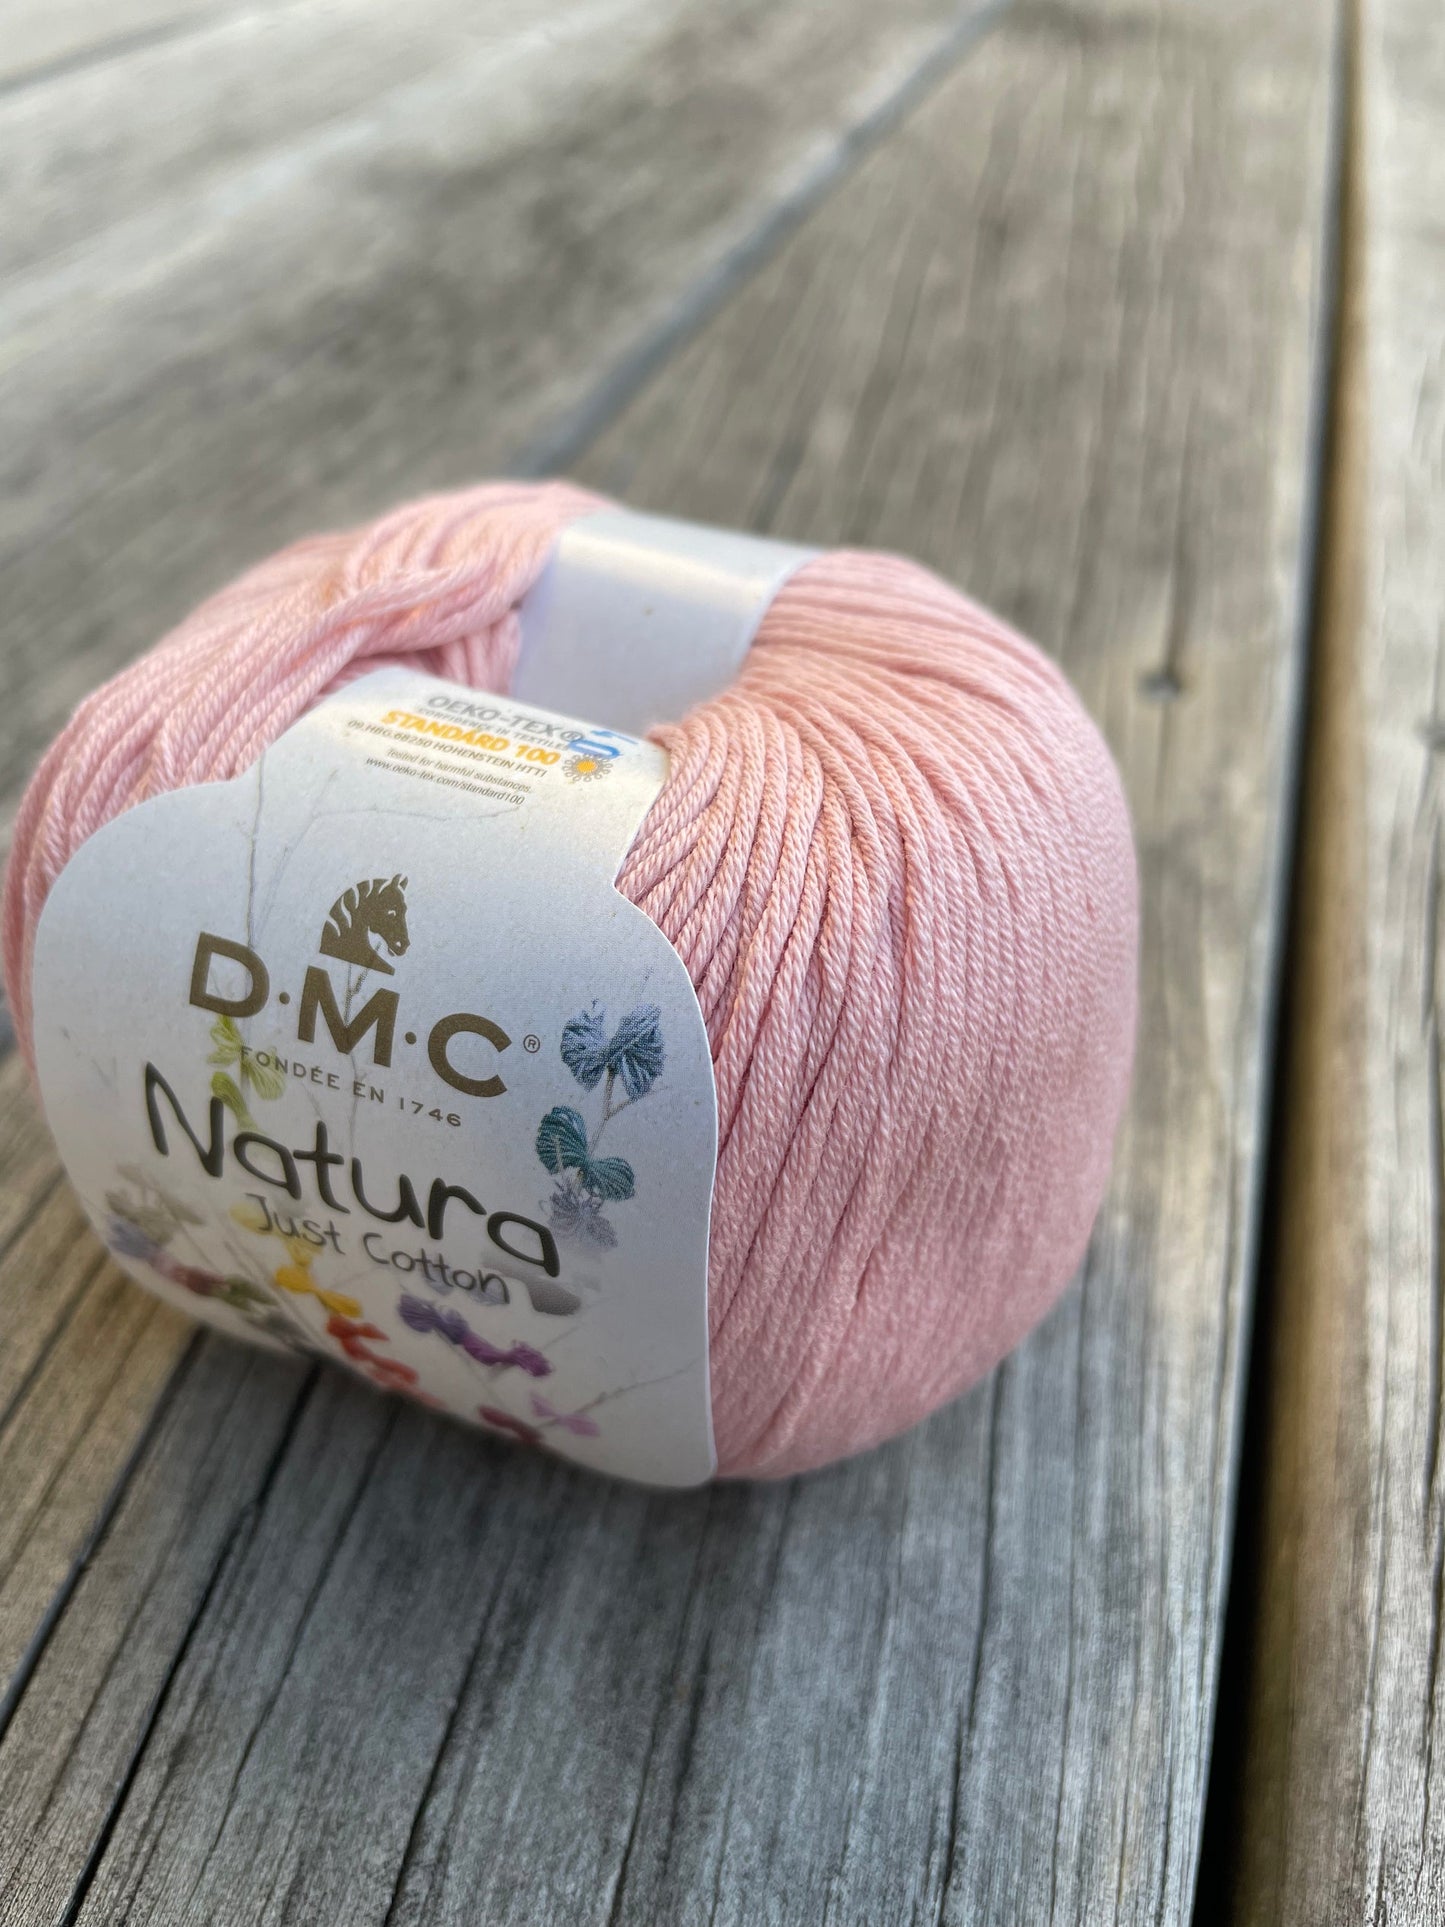 DMC Natura Just Cotton #N80 - Salomé From DMC - DMC Natura © - Threads &  Yarns - Casa Cenina